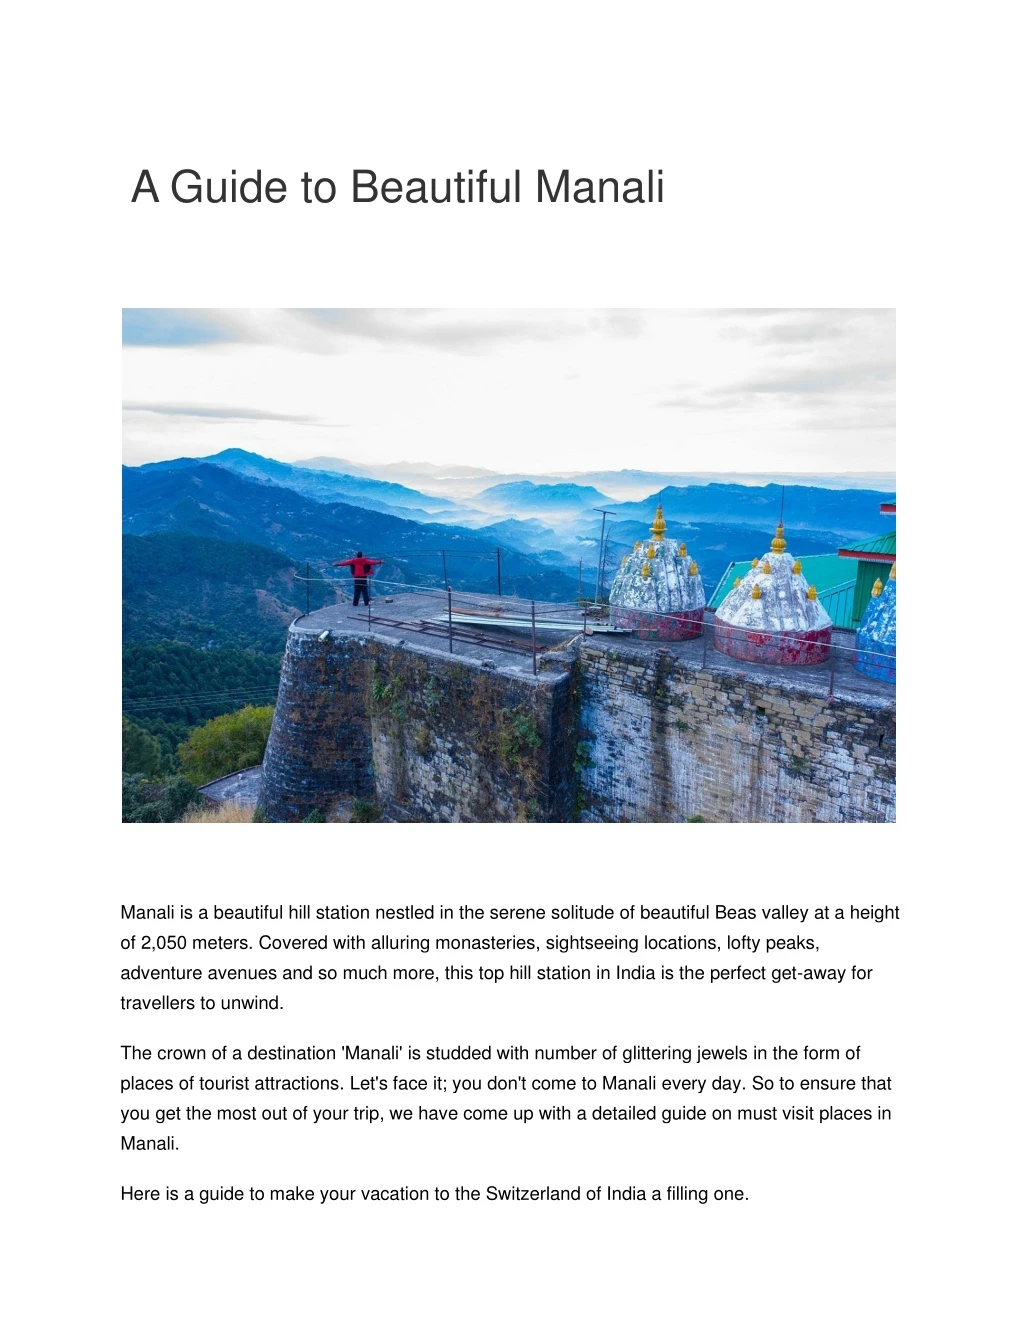 a guide to beautiful manali